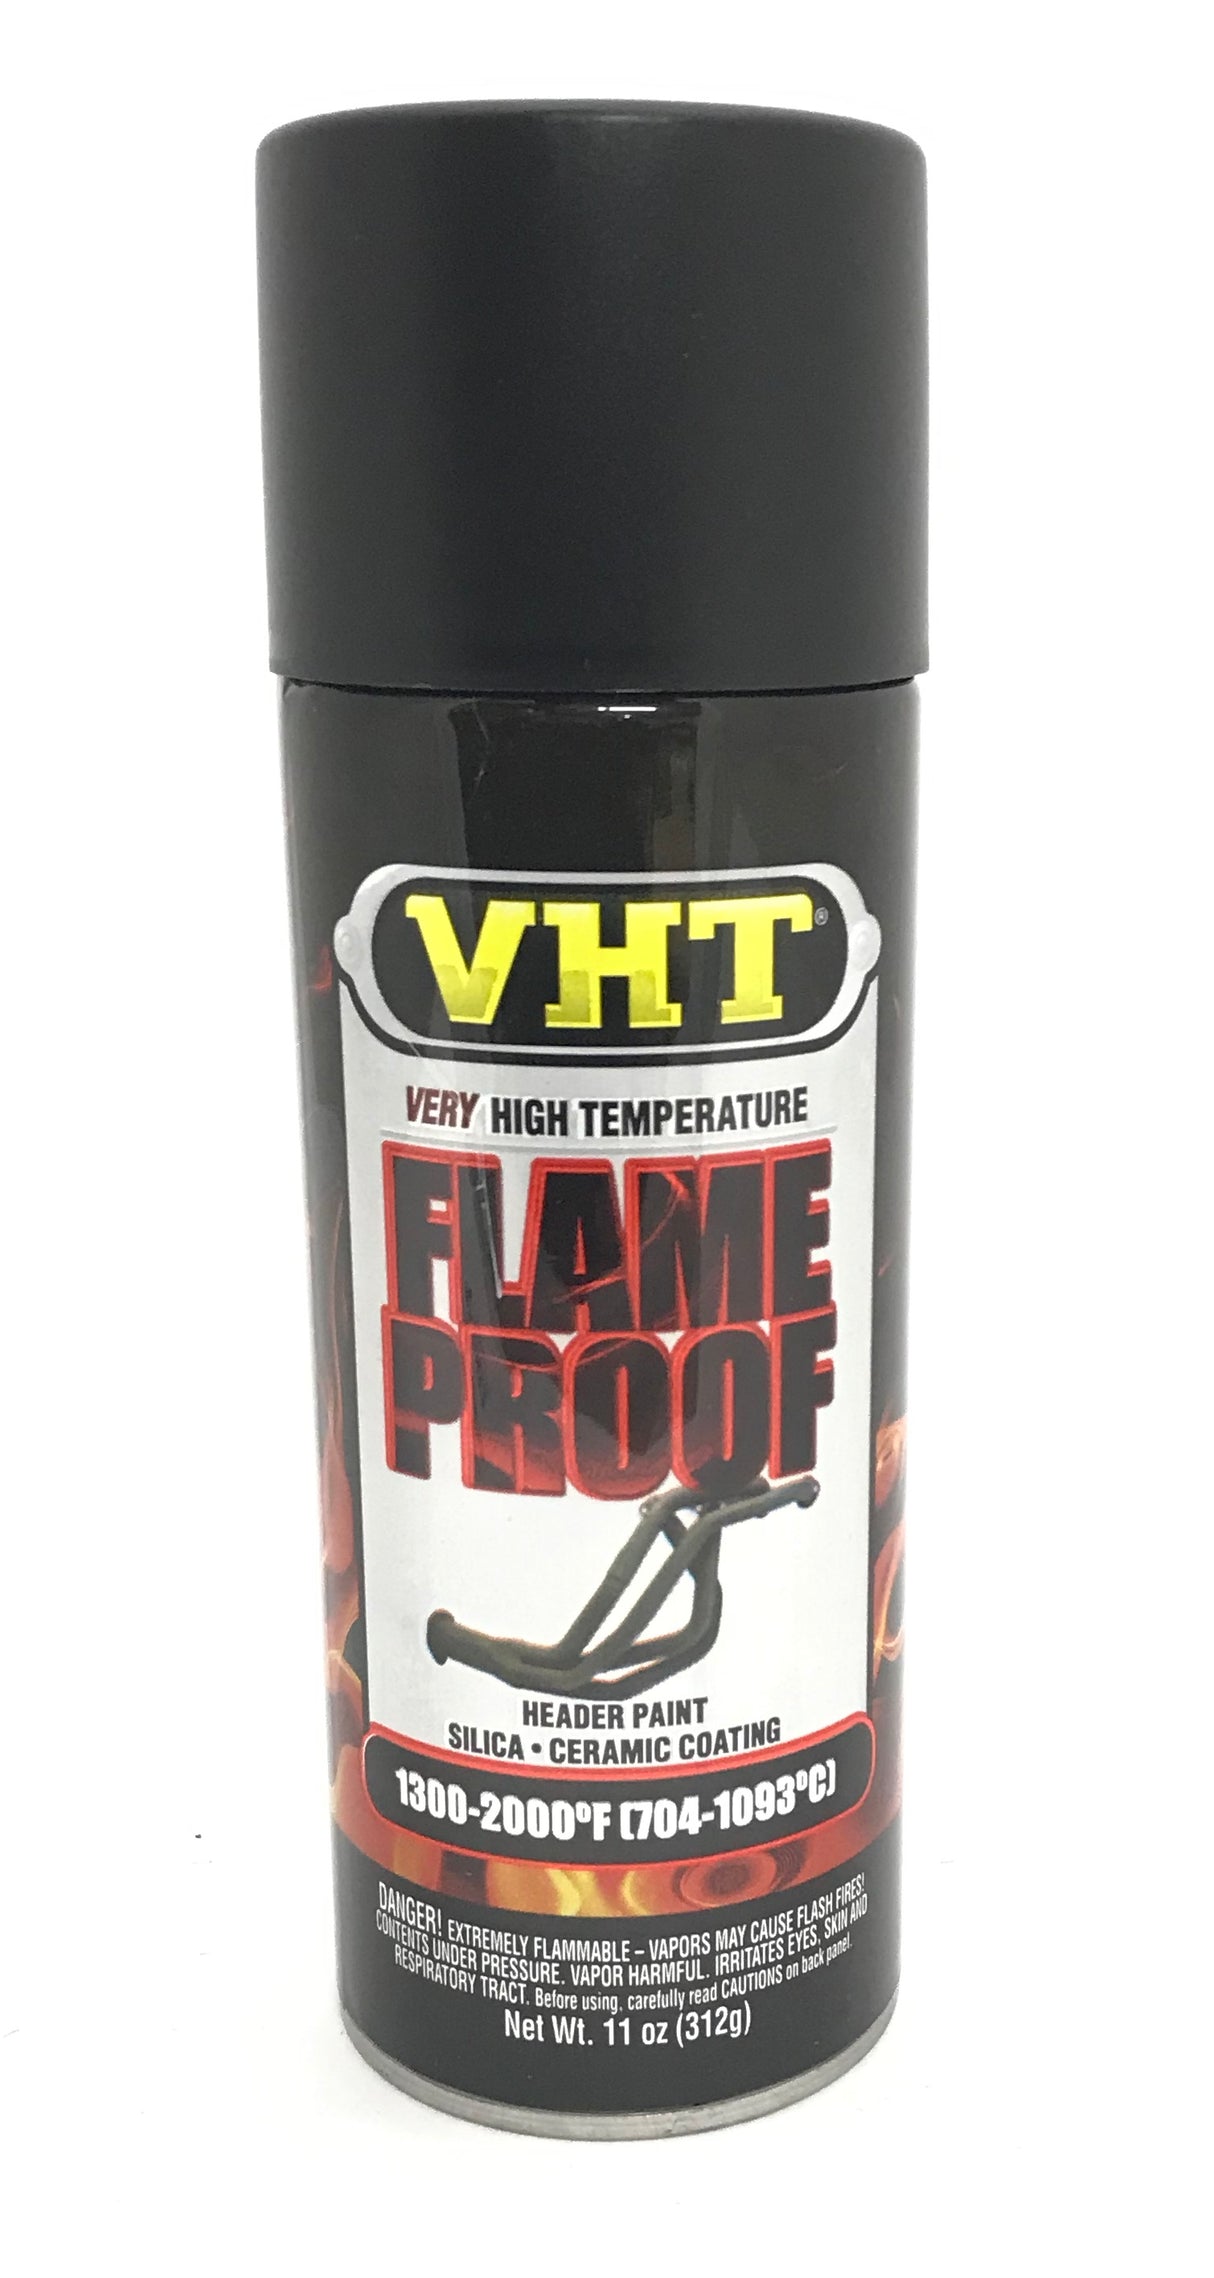 VHT SP102 FLAT BLACK High Temperature Flame Proof Header Paint - 11 oz